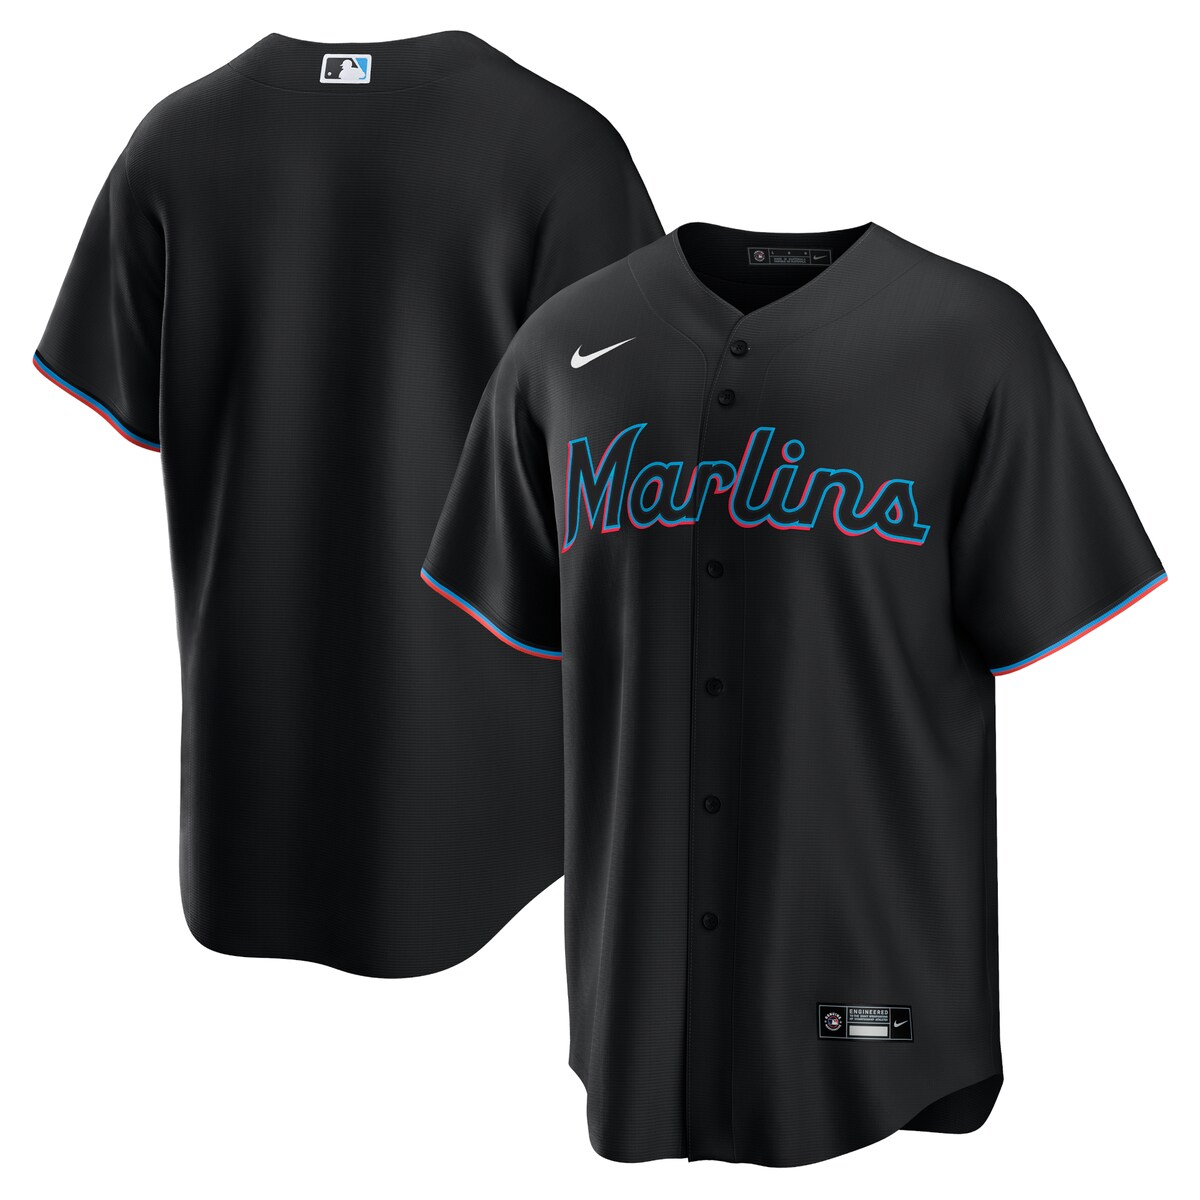 MLB マーリンズ レプリカ ユニフォーム Nike ナイキ メンズ ブラック (Men's Nike Replica Team Jersey)